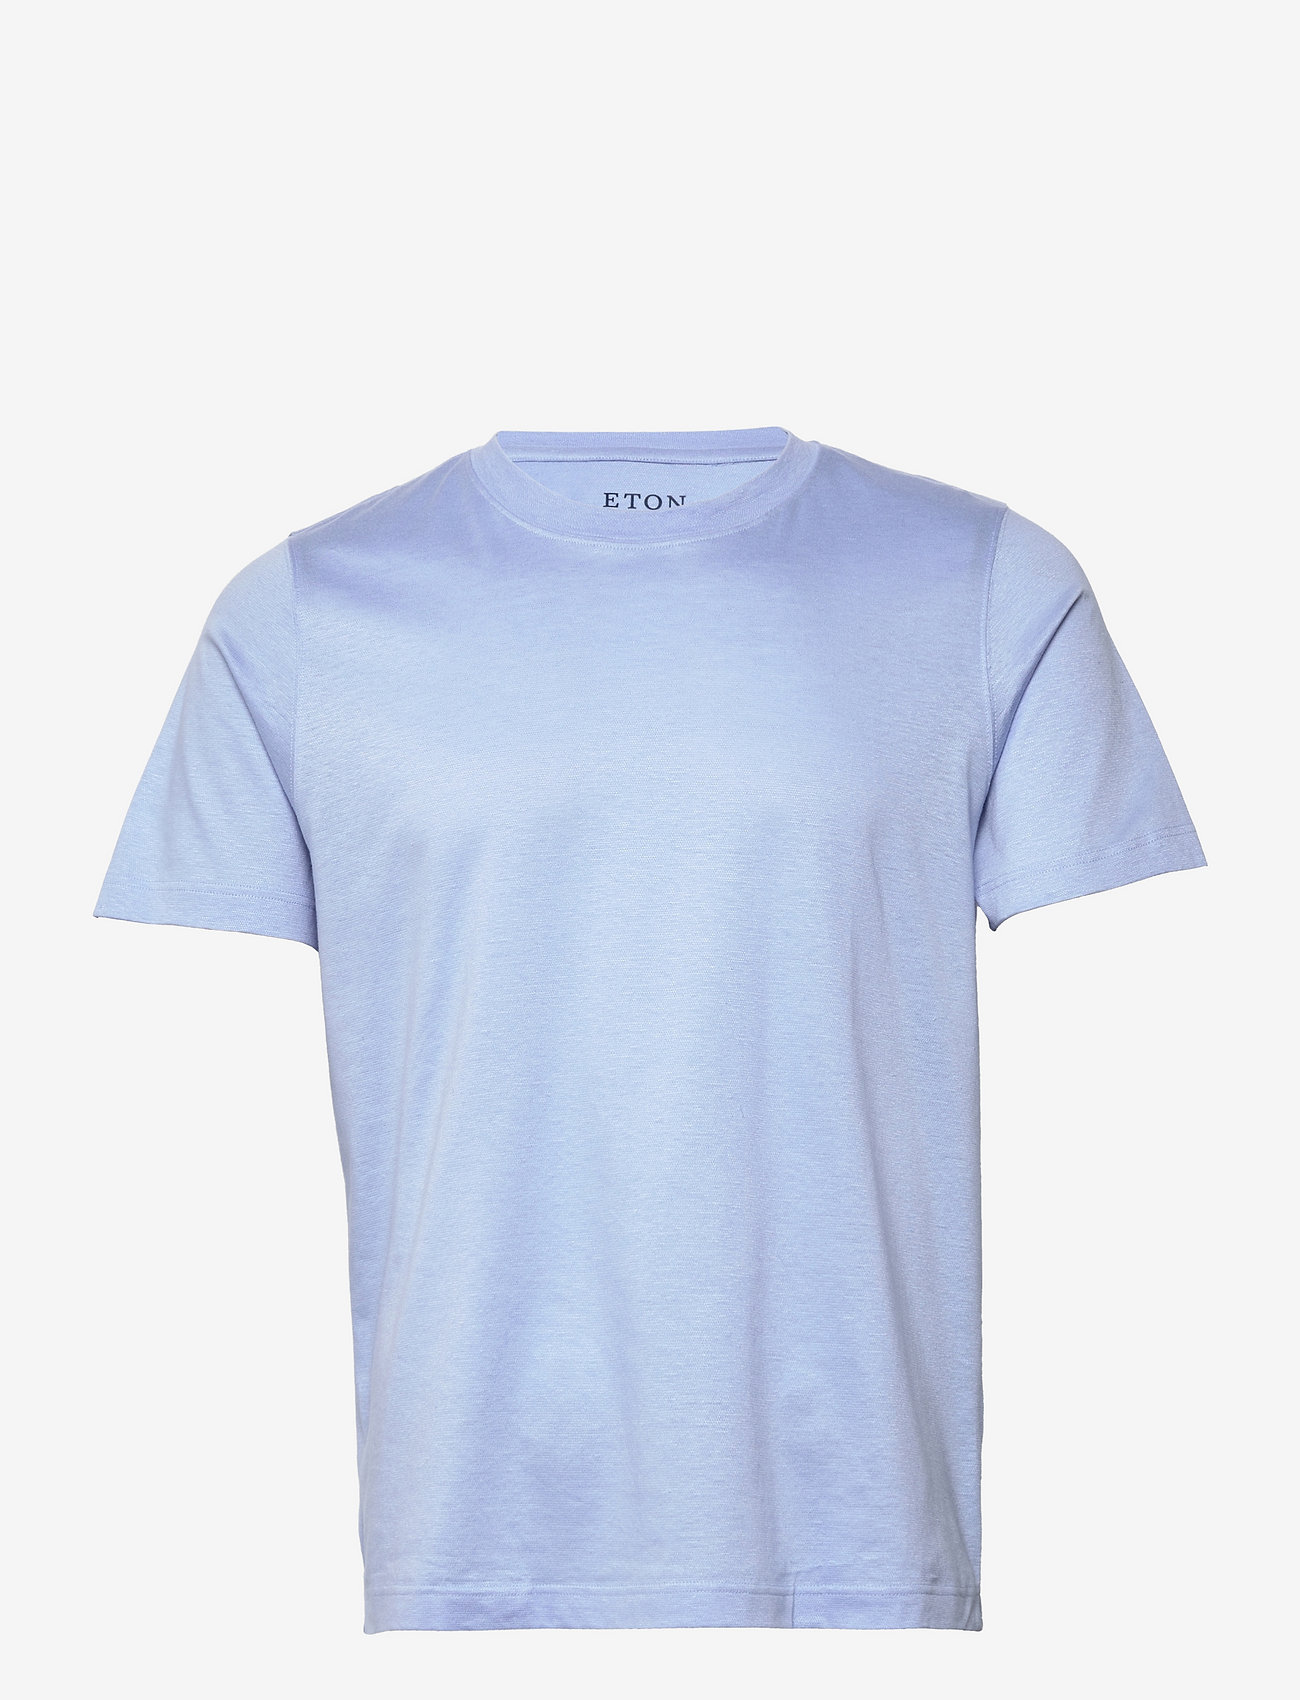 Eton - Men's shirt: Casual  Cotton Linen knit - t-shirts - light blue - 1